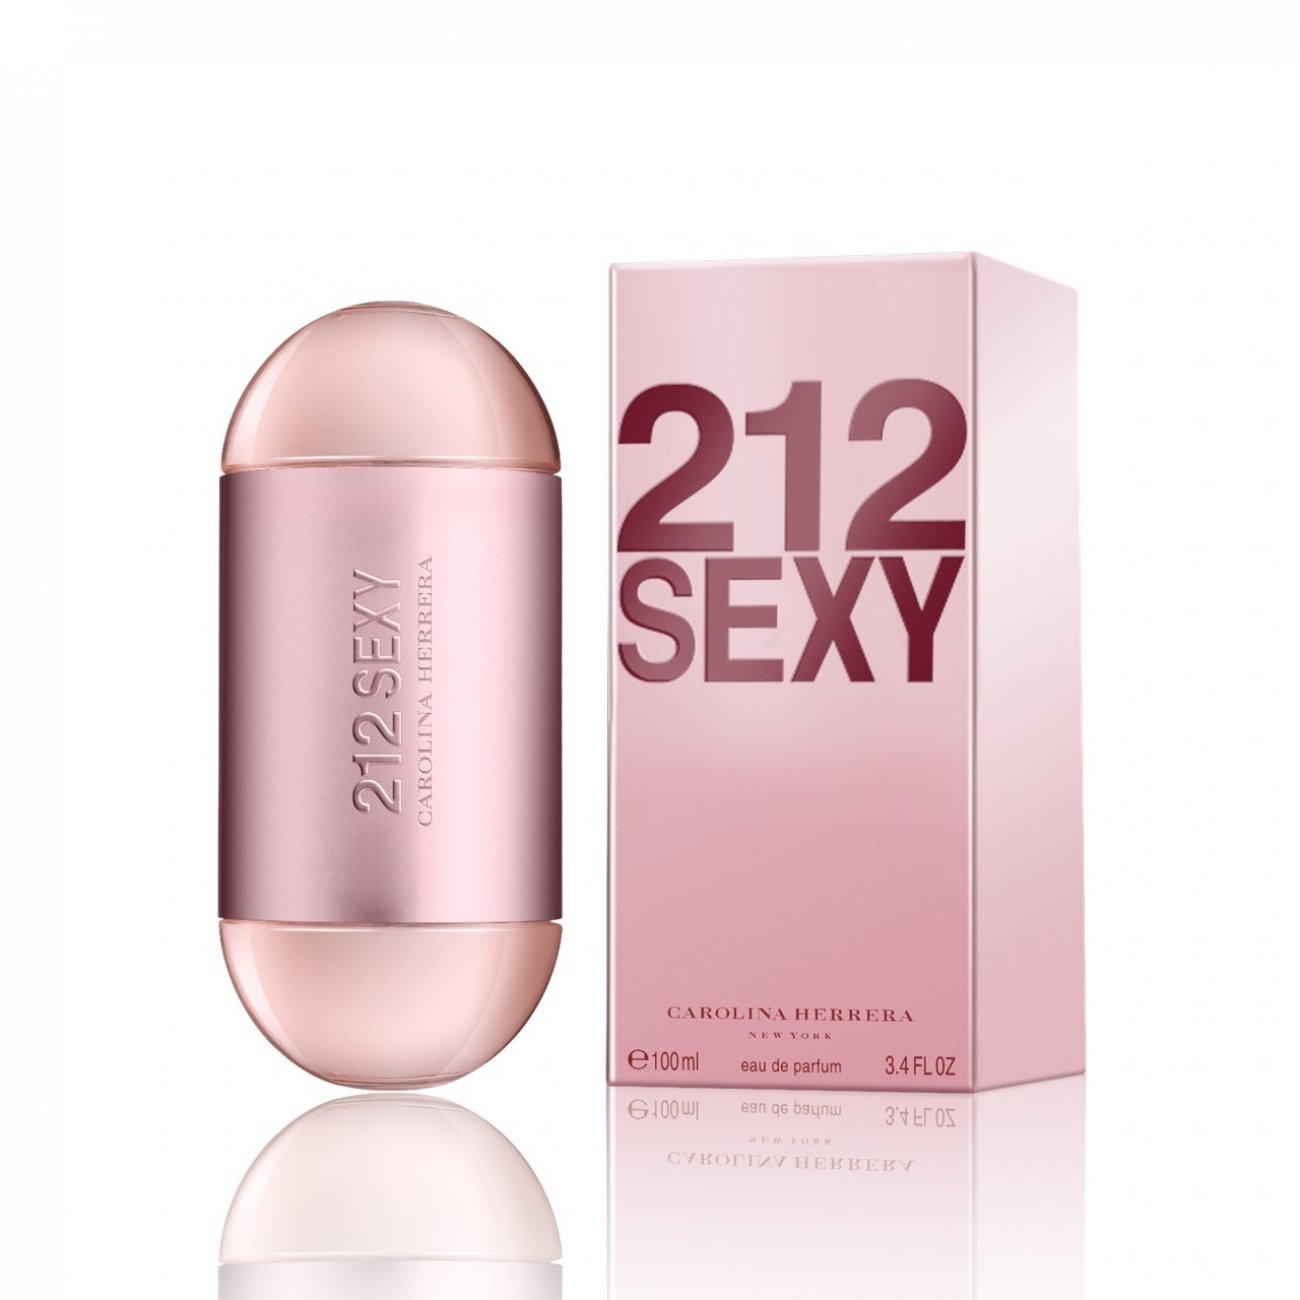 Buy Carolina Herrera 212 Sexy Eau de Parfum · Macau